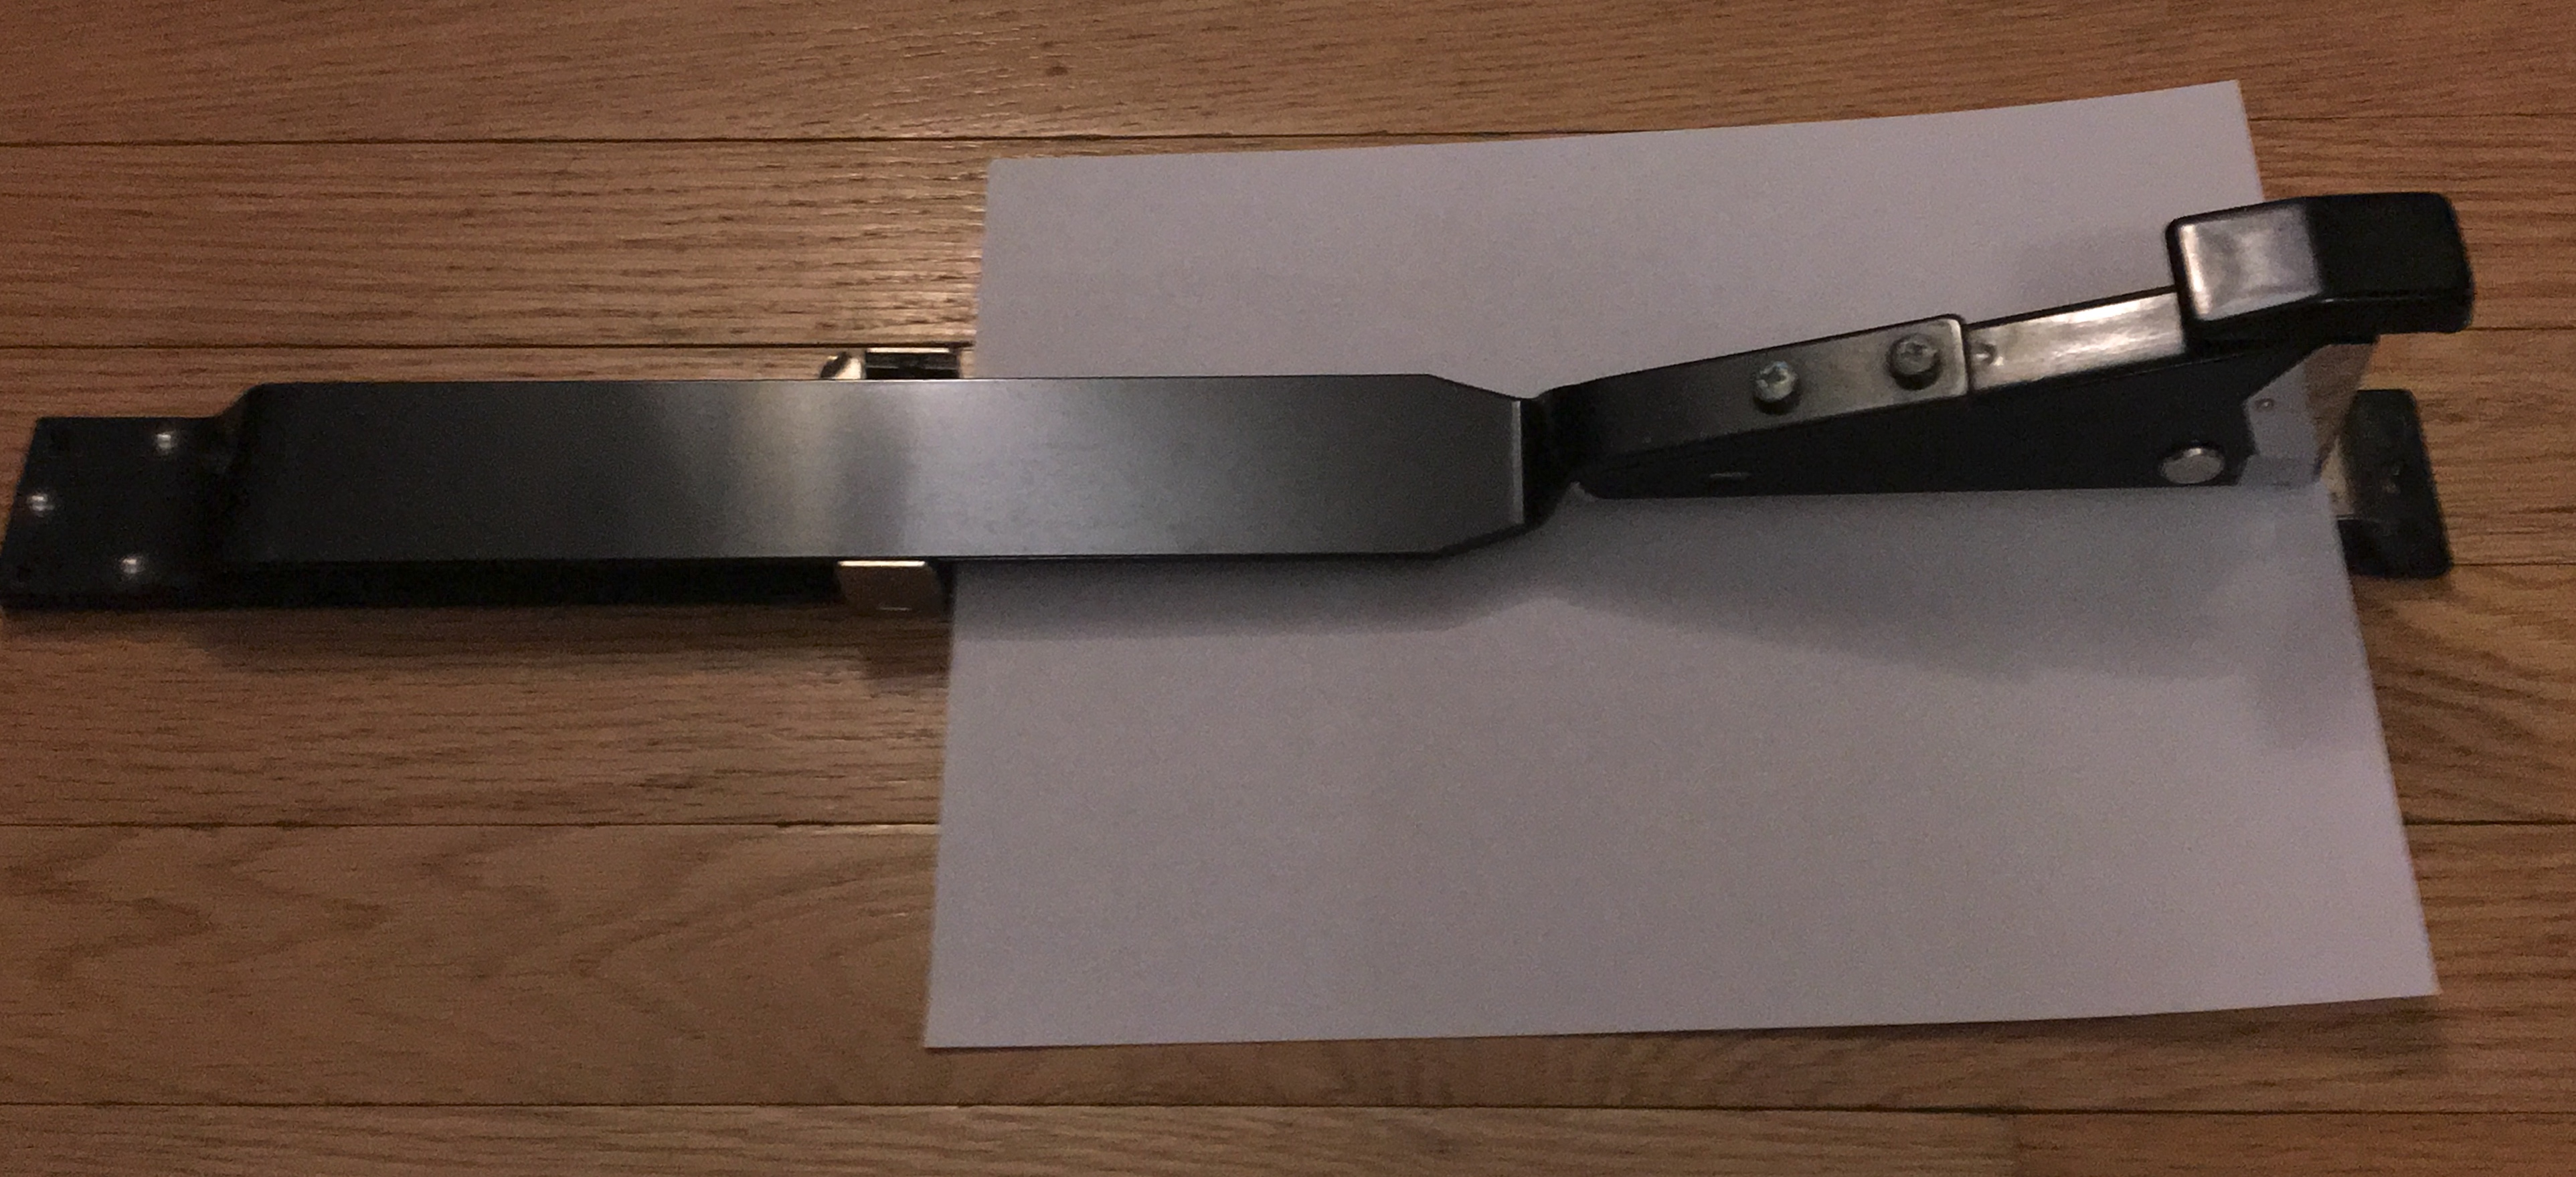 The long arm of the stapler